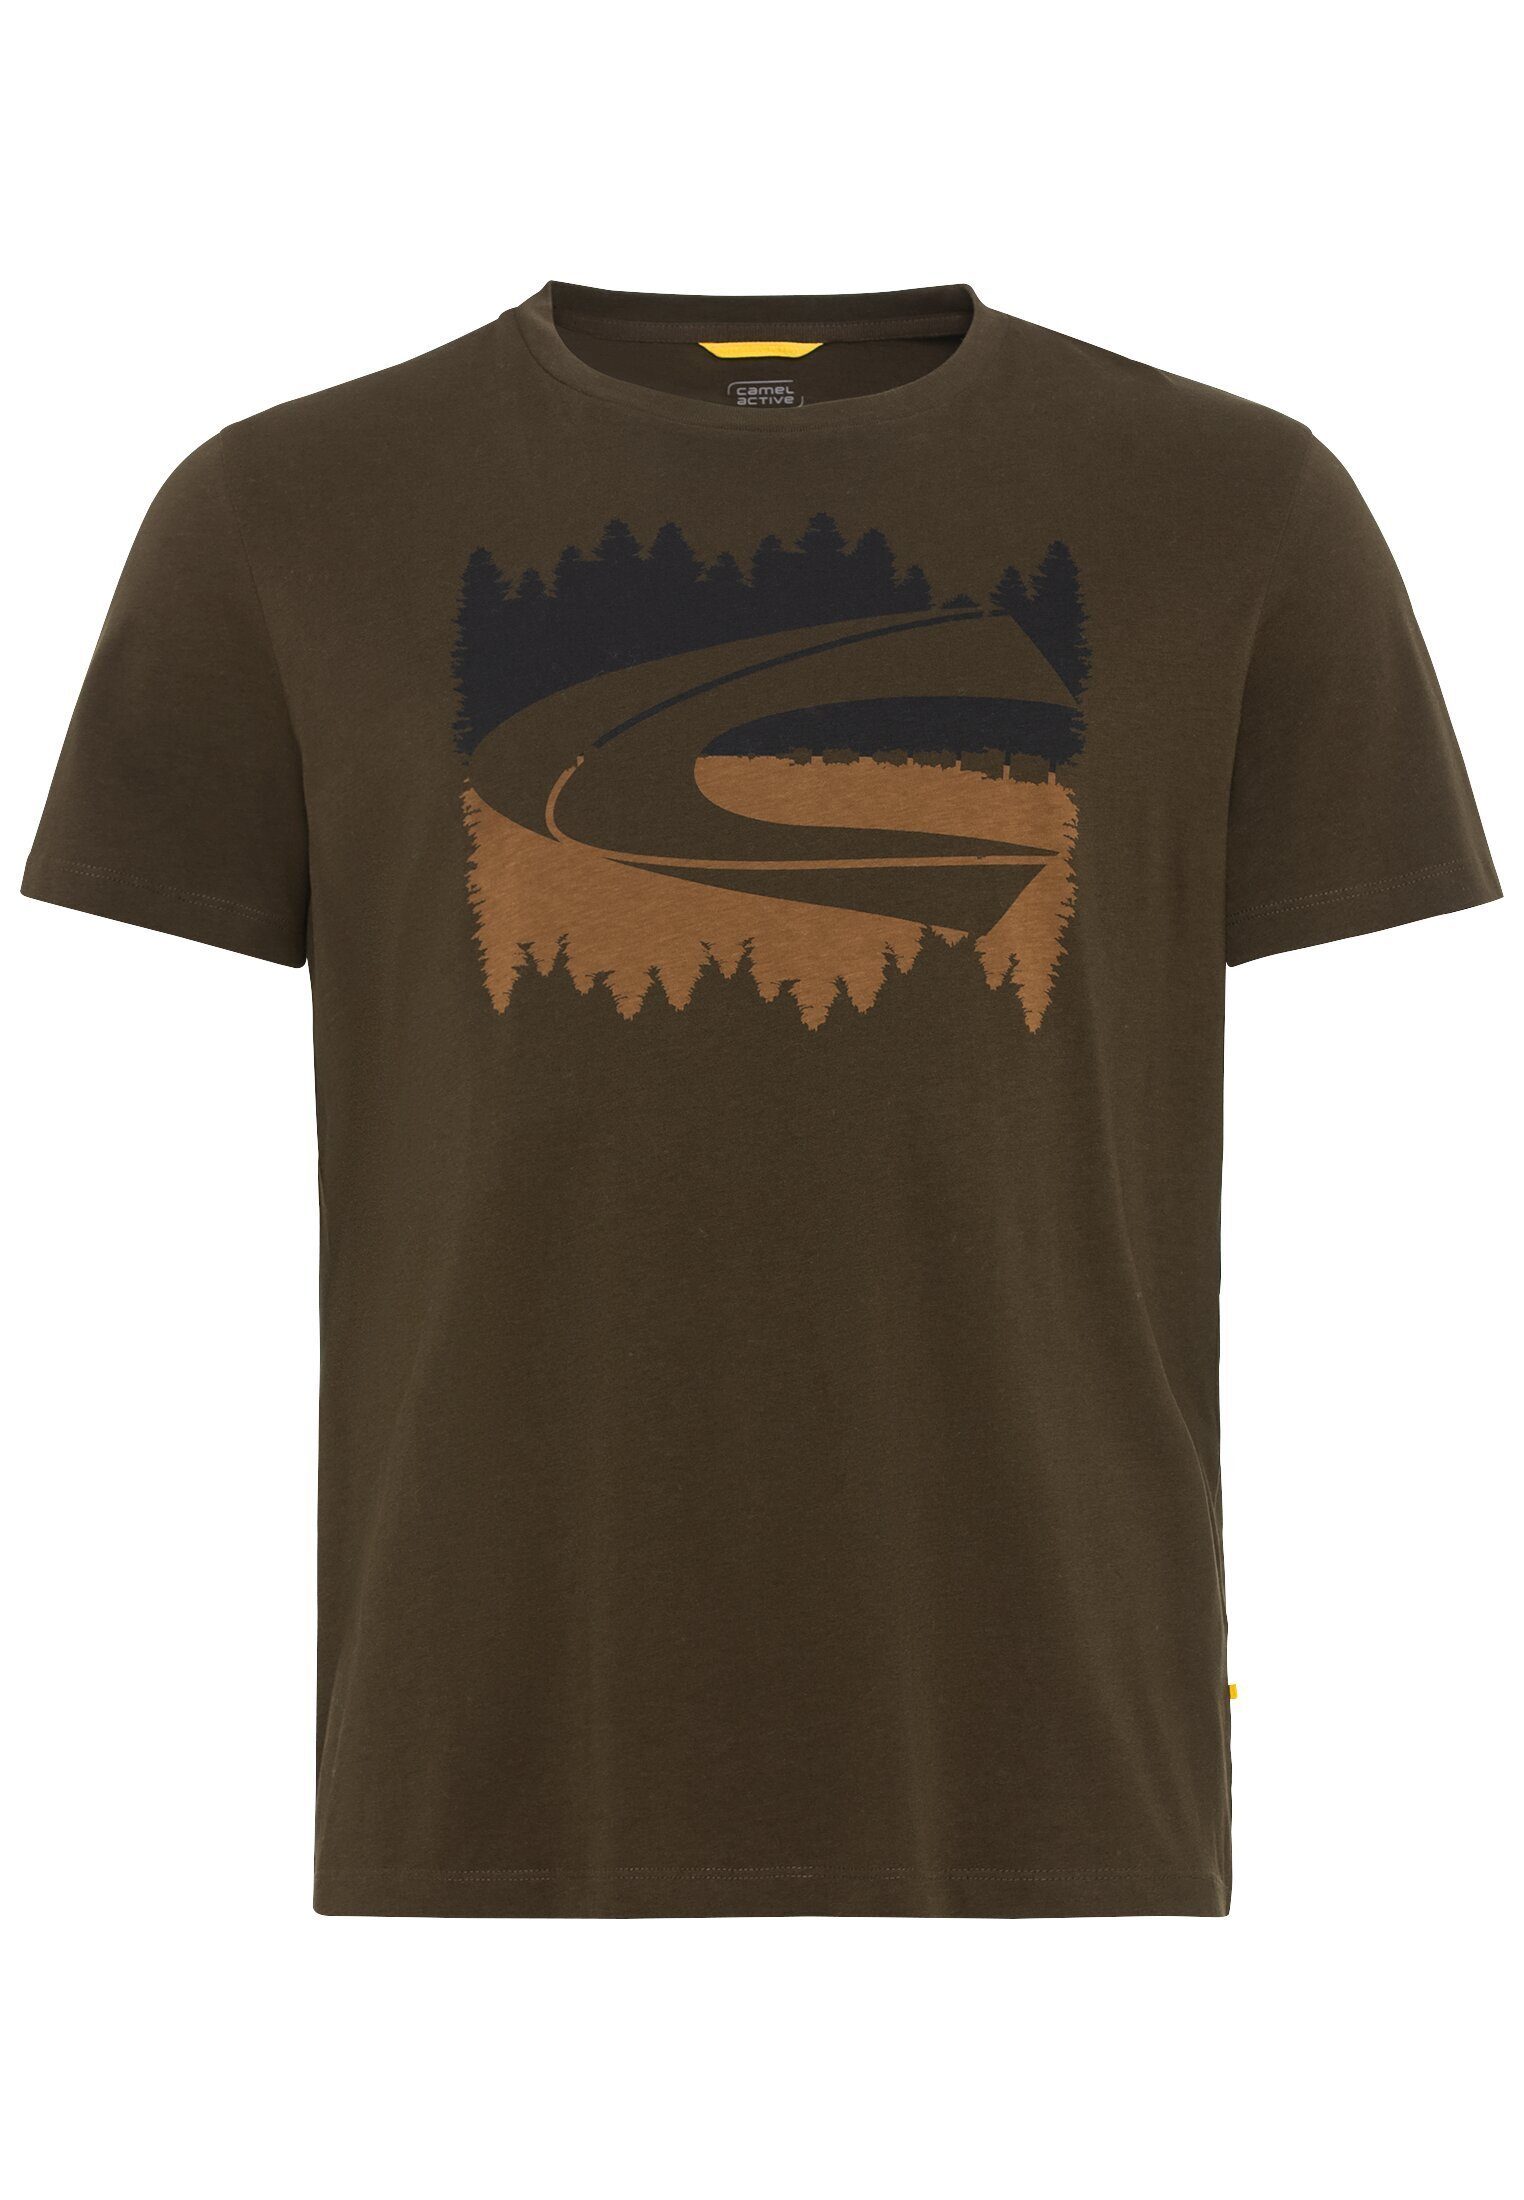 T-Shirt Organic Cotton Dunkel aus camel active khaki